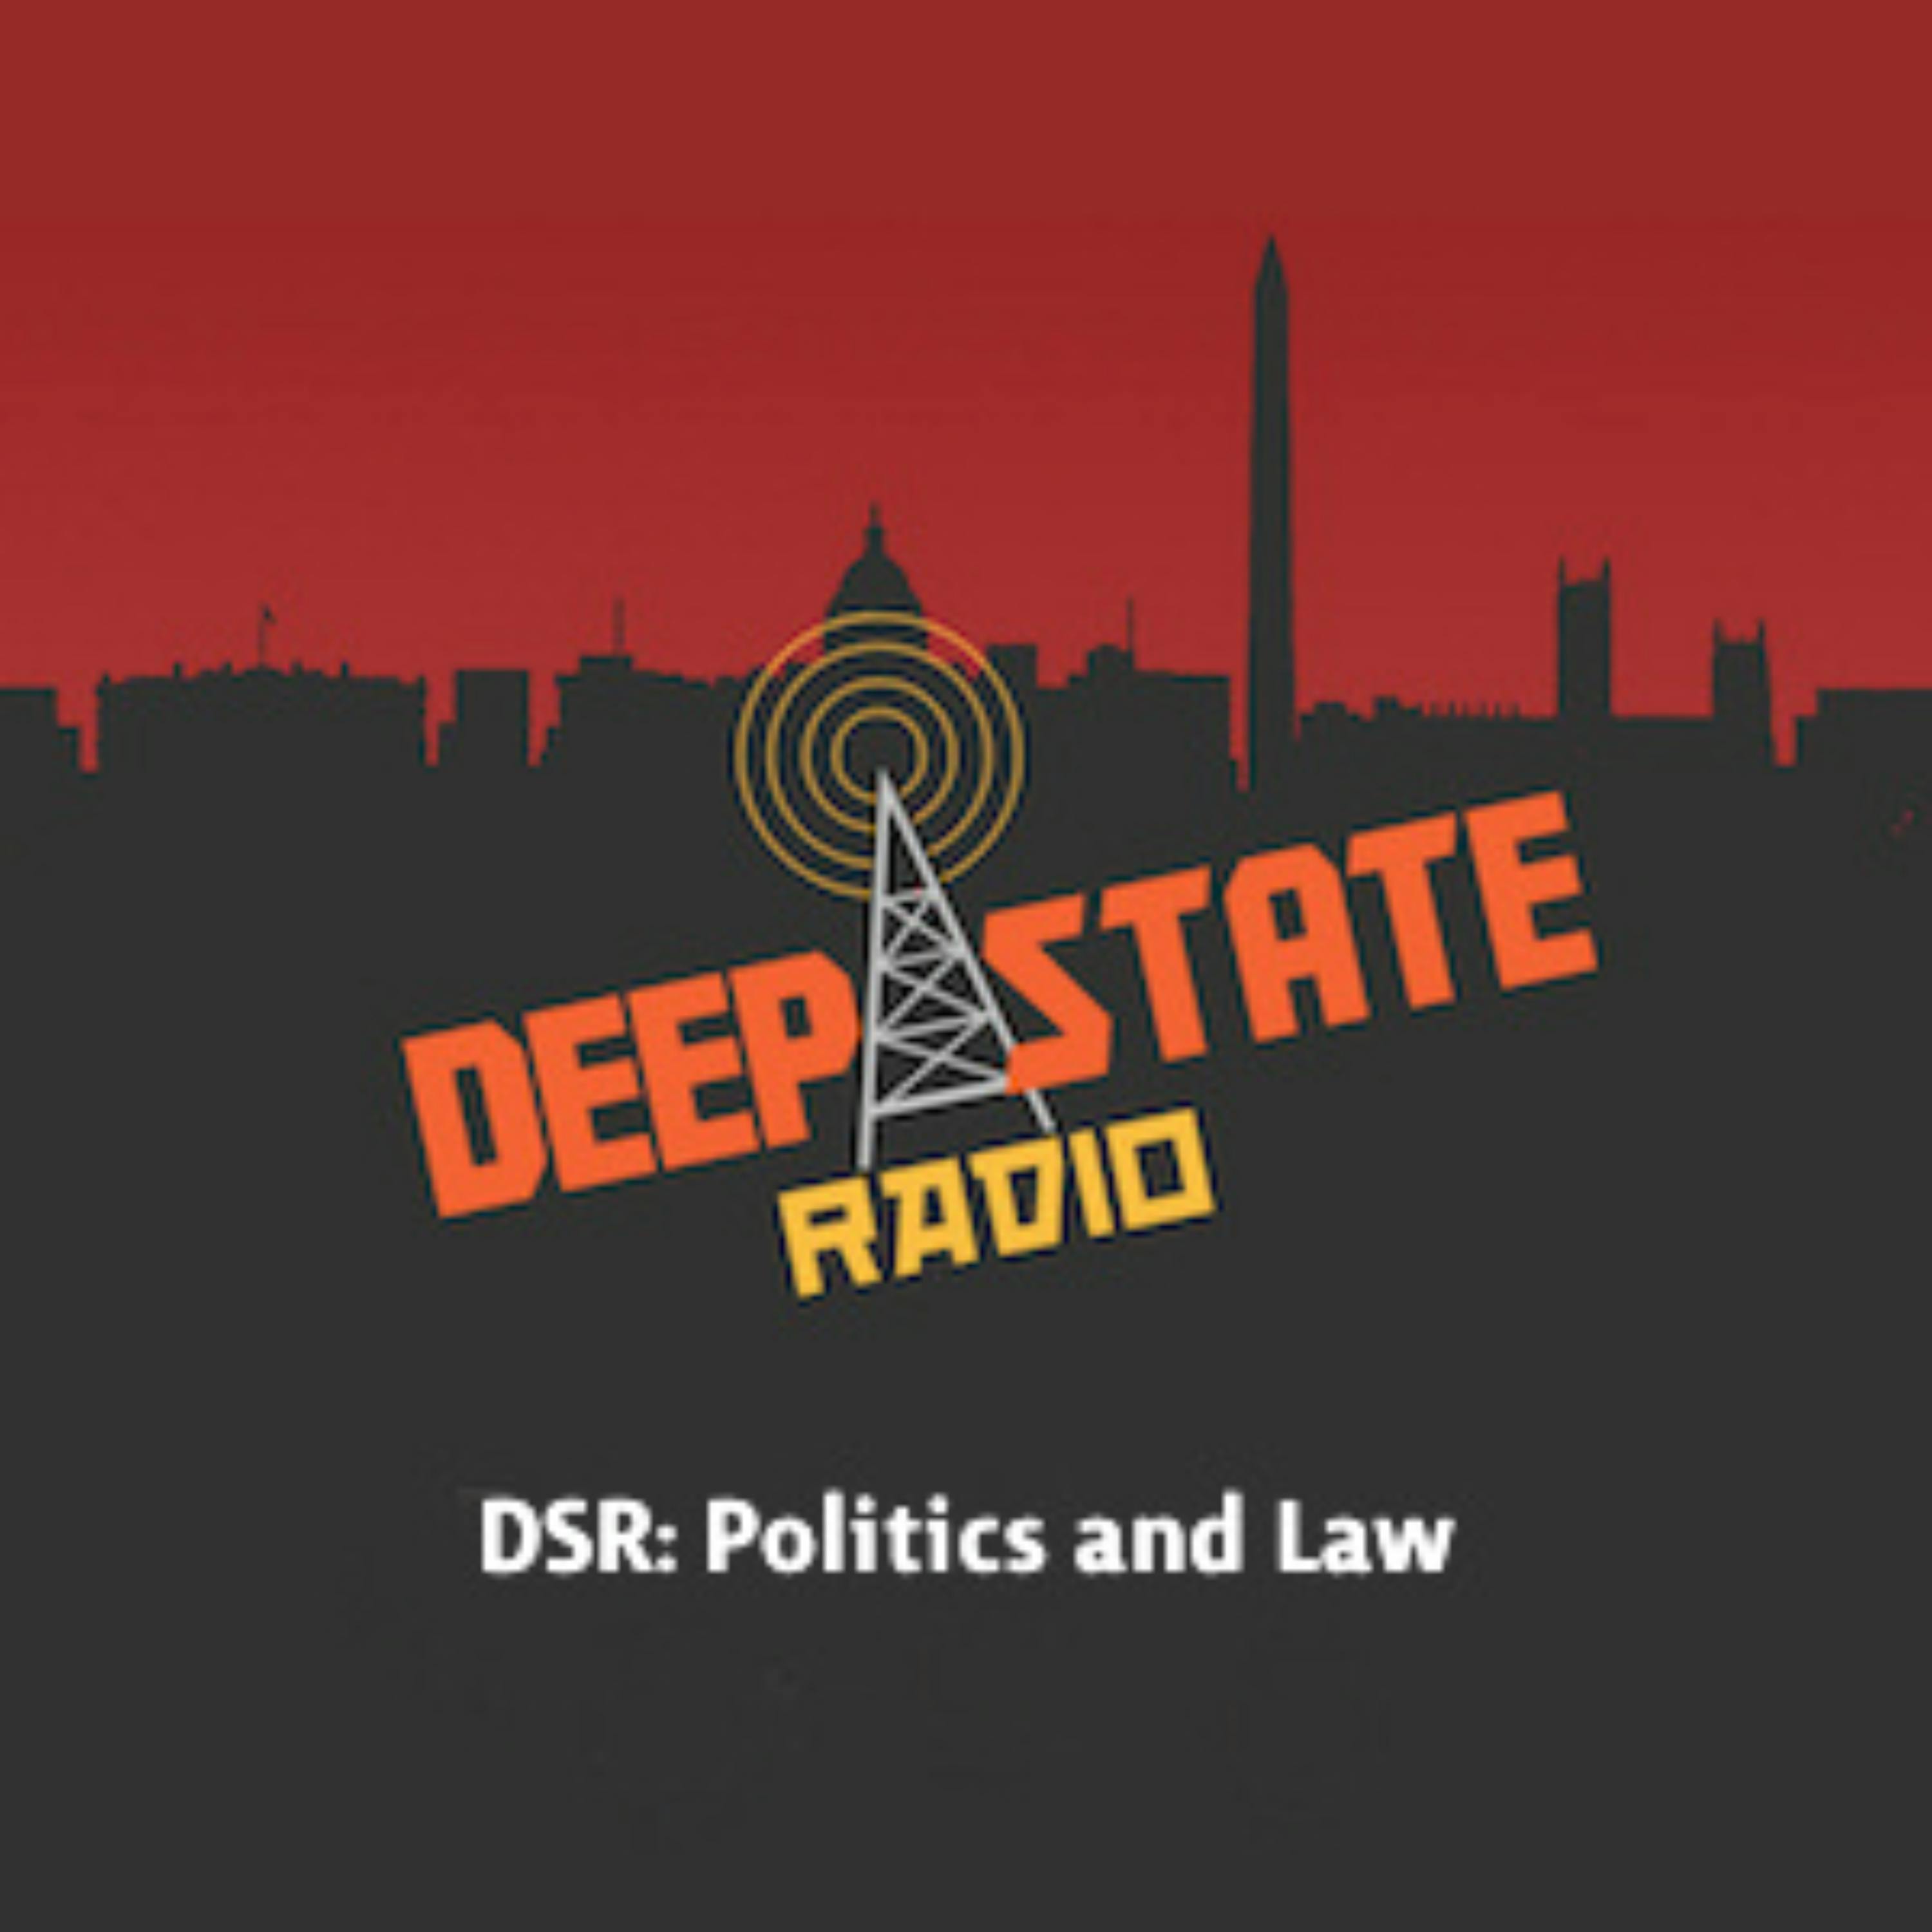 DSR: Politics and Law